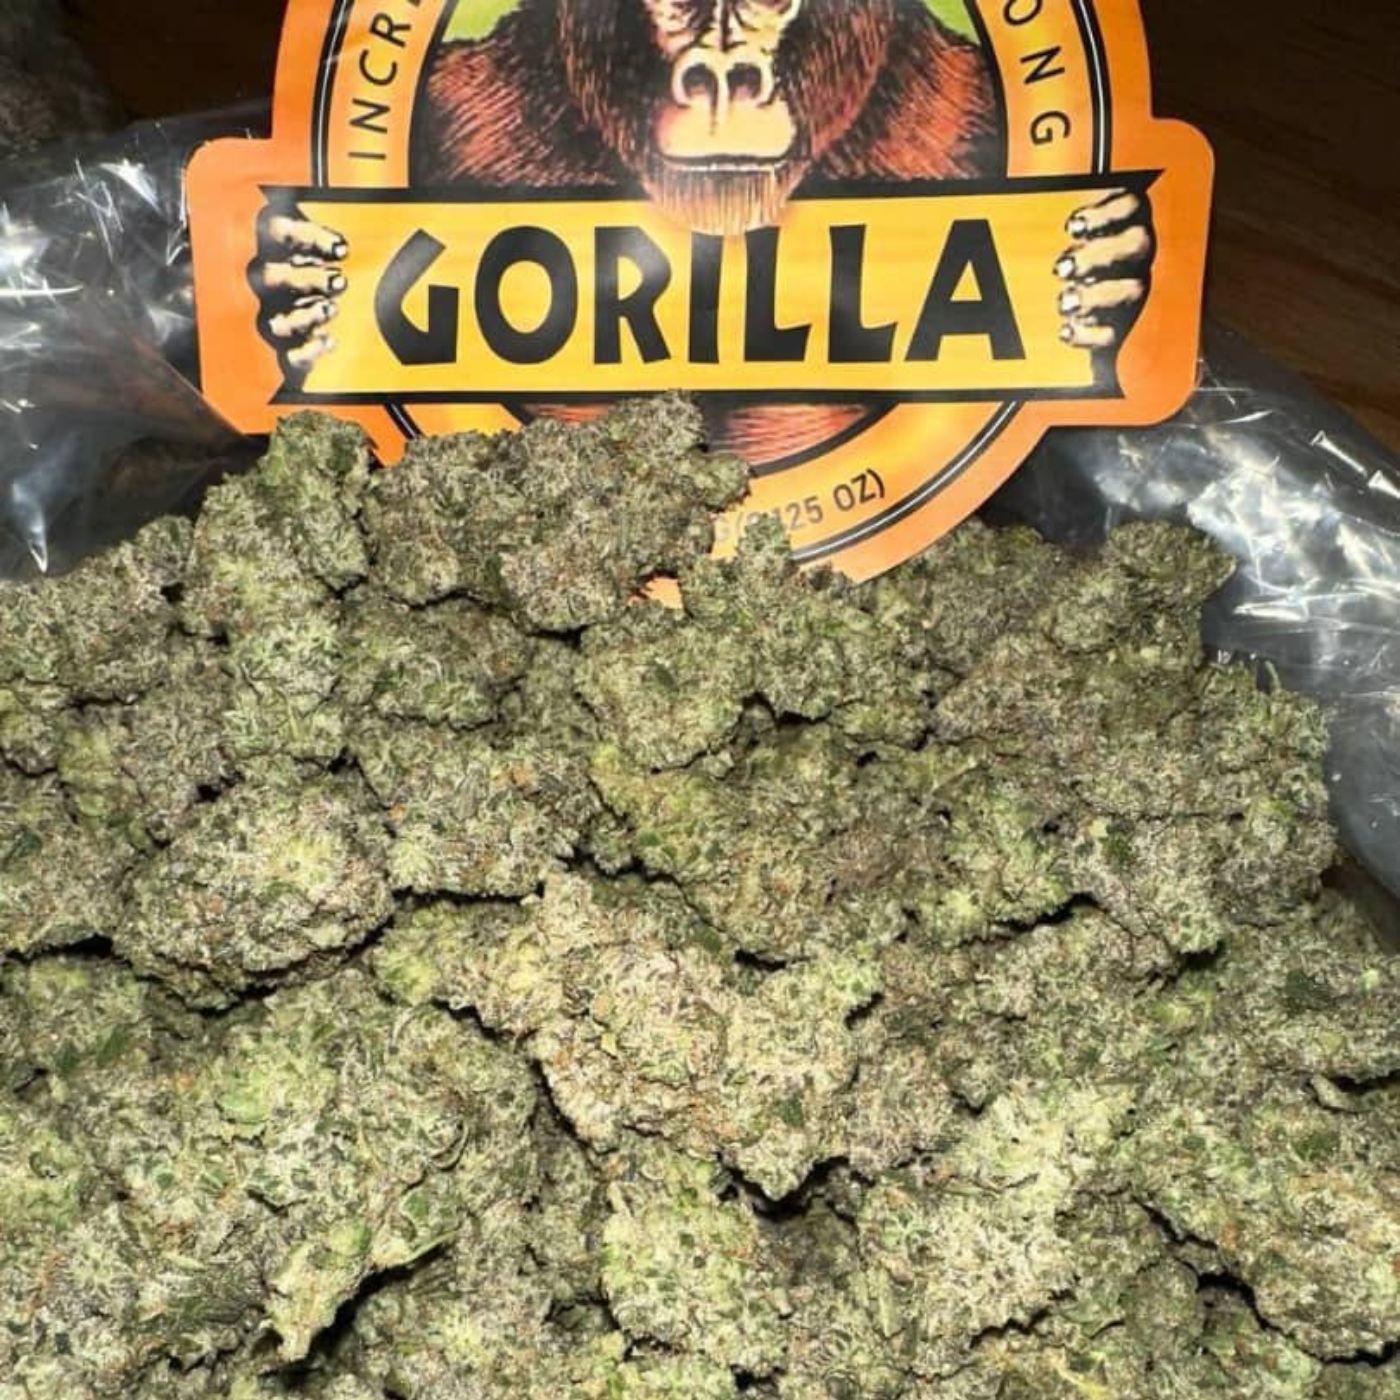 Buy Gorilla Glue 4 online, gorilla glue #4 strain, cannabis gorilla glue, gg#4, gorilla glue 4, Gorilla Glue Weed Canada,